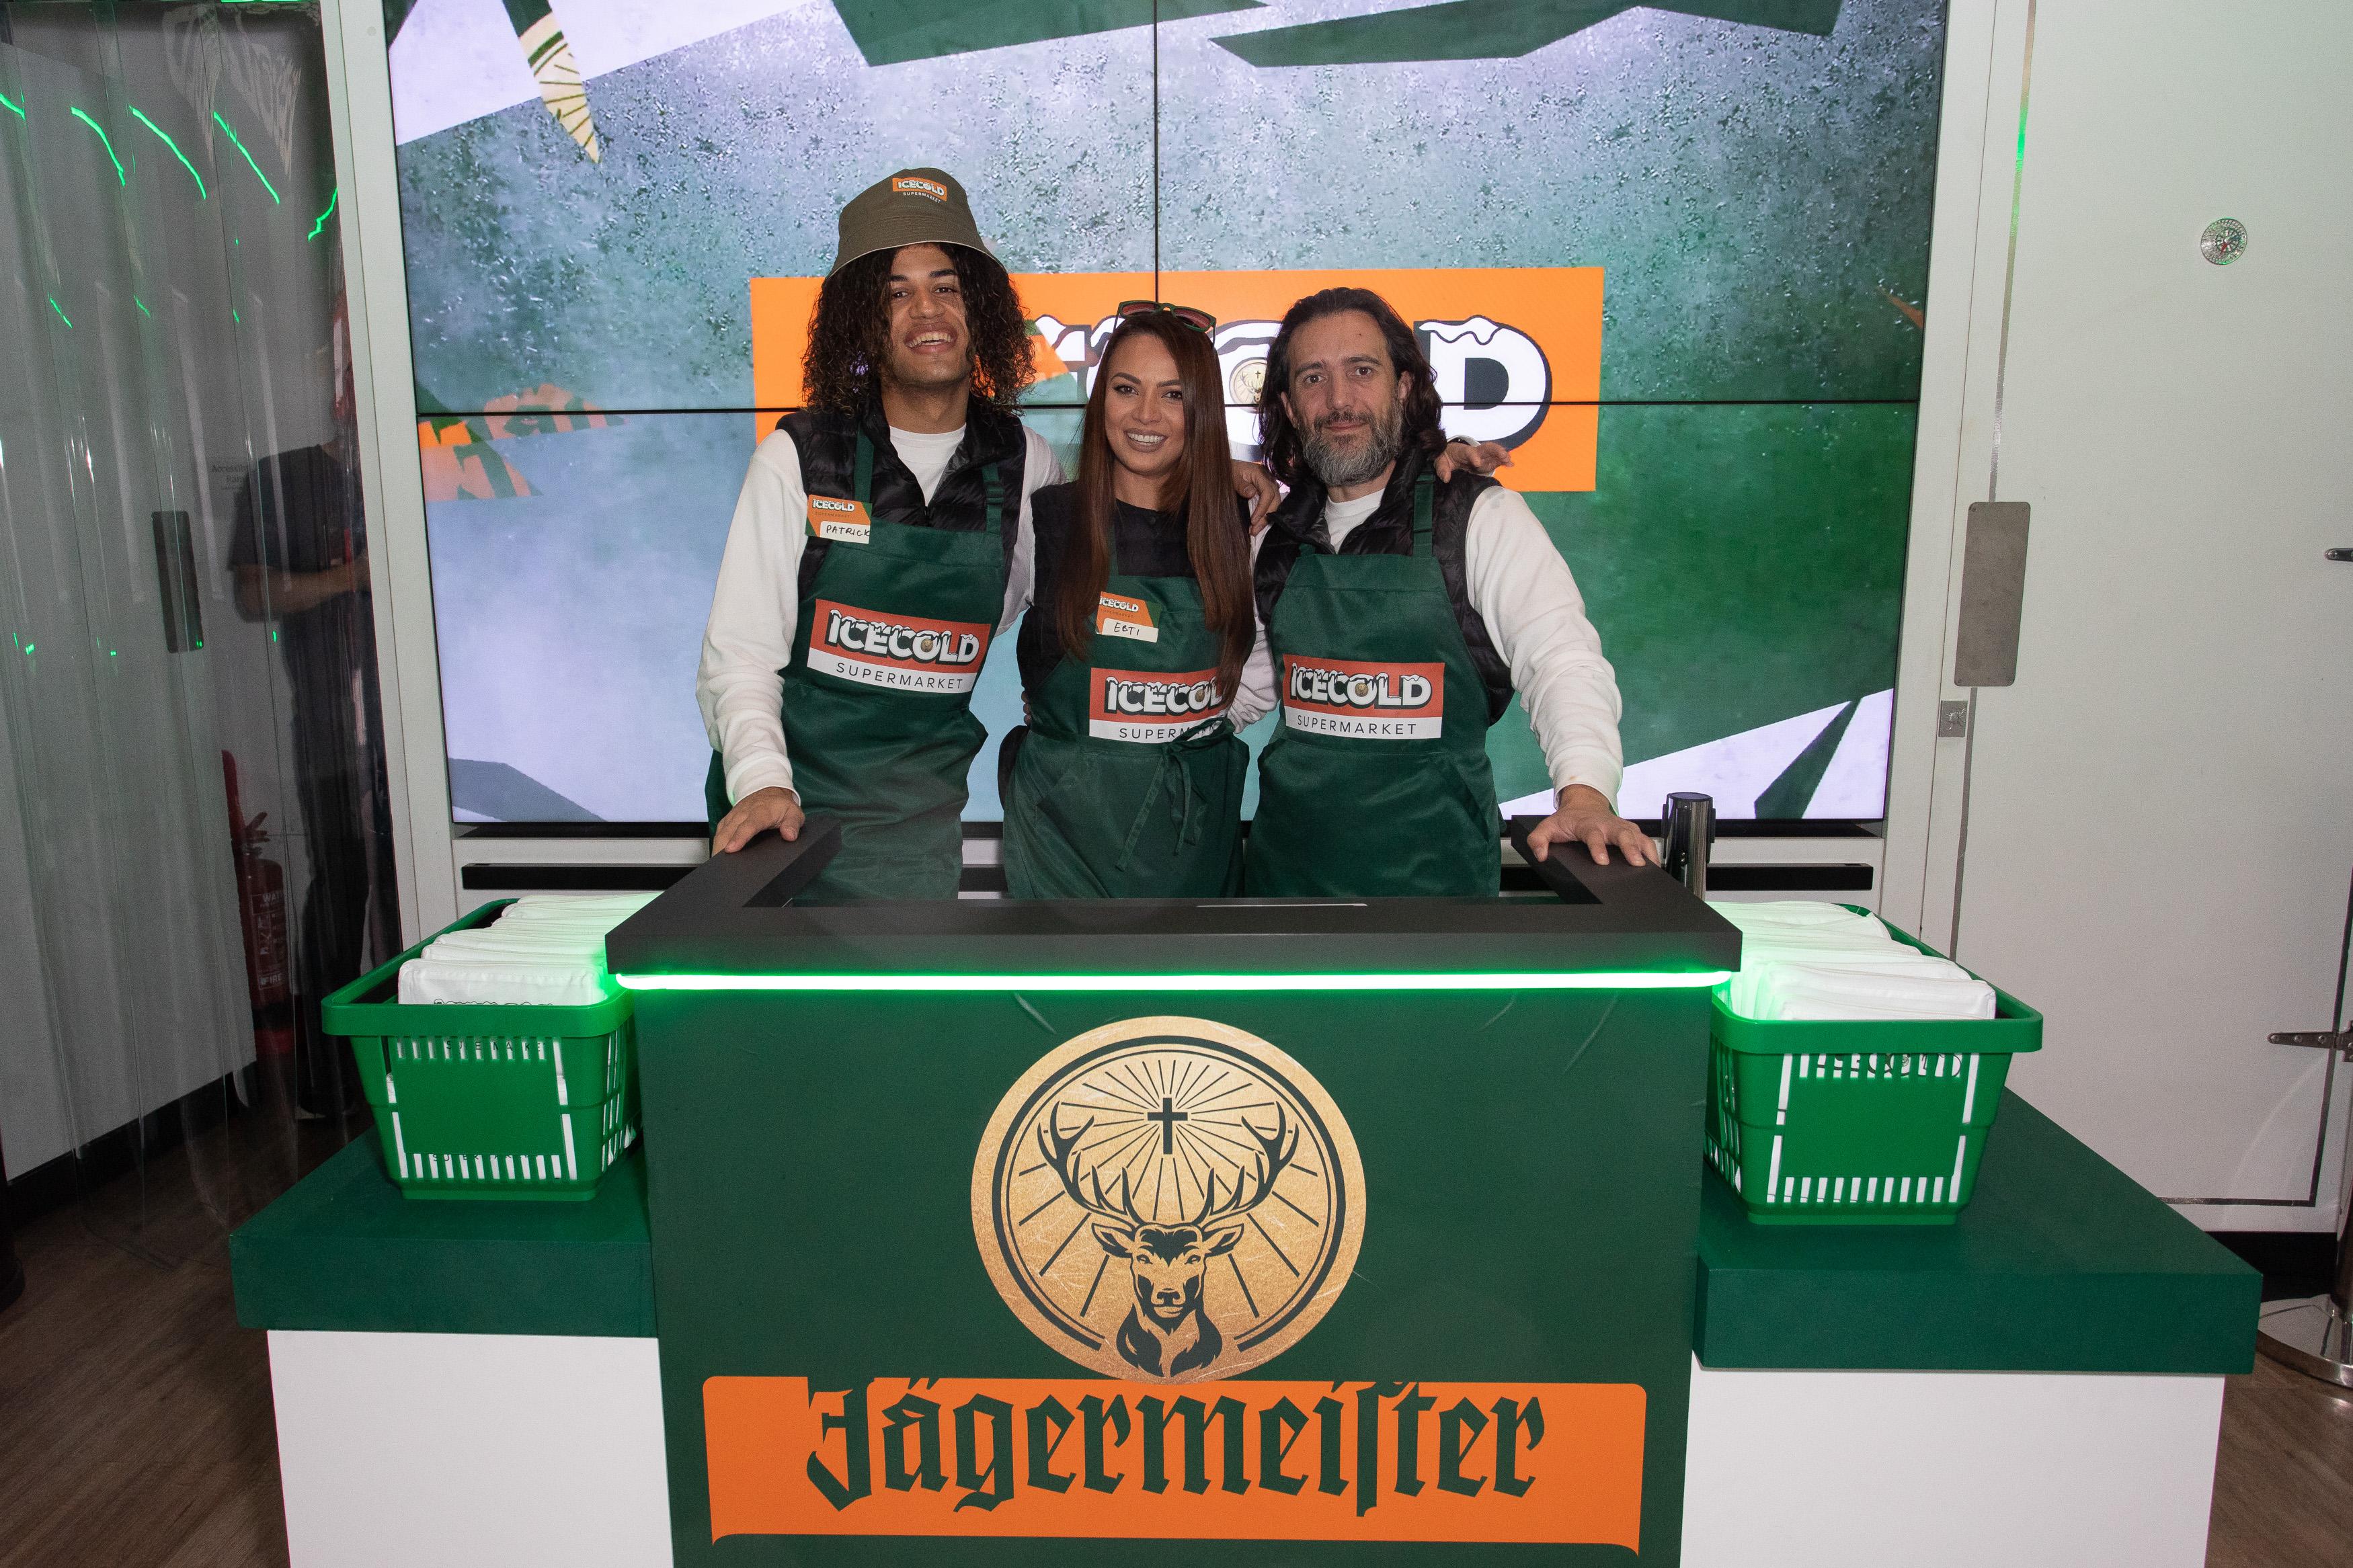 3 jagermeister staff behind cash desk smiling during Jagermeister pop up at Sook in Oxford Street